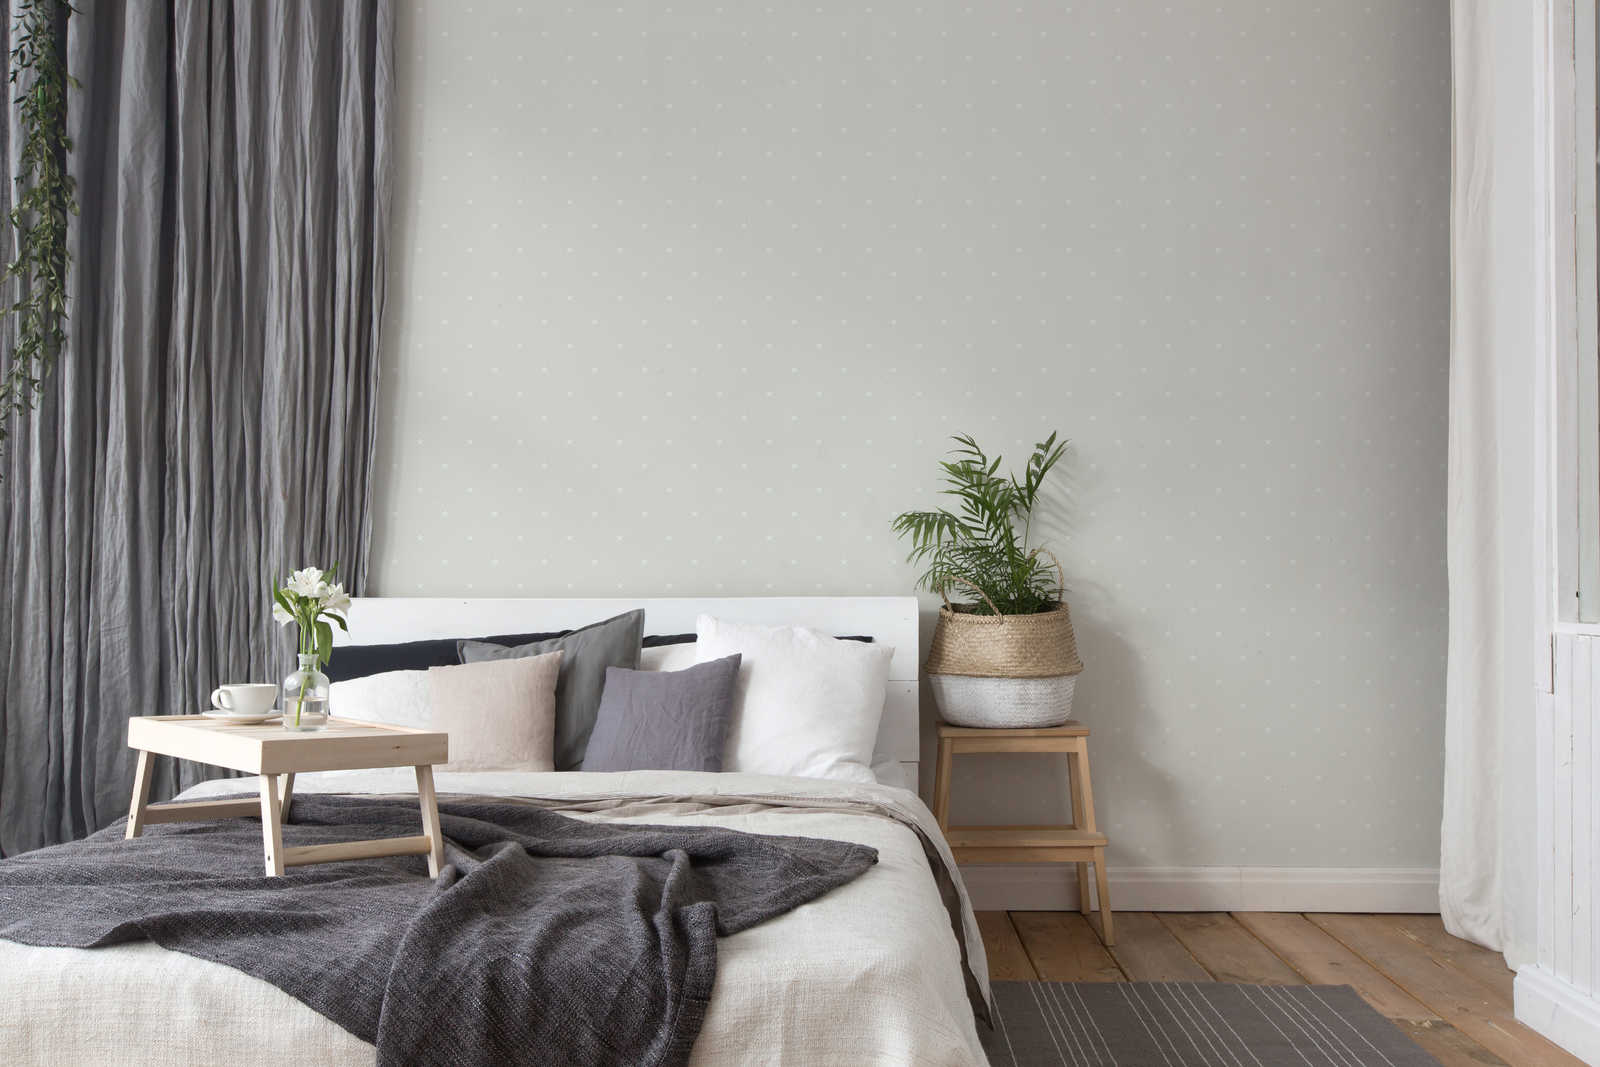             MICHALSKY non-woven wallpaper lozenge design with stars - beige, grey
        